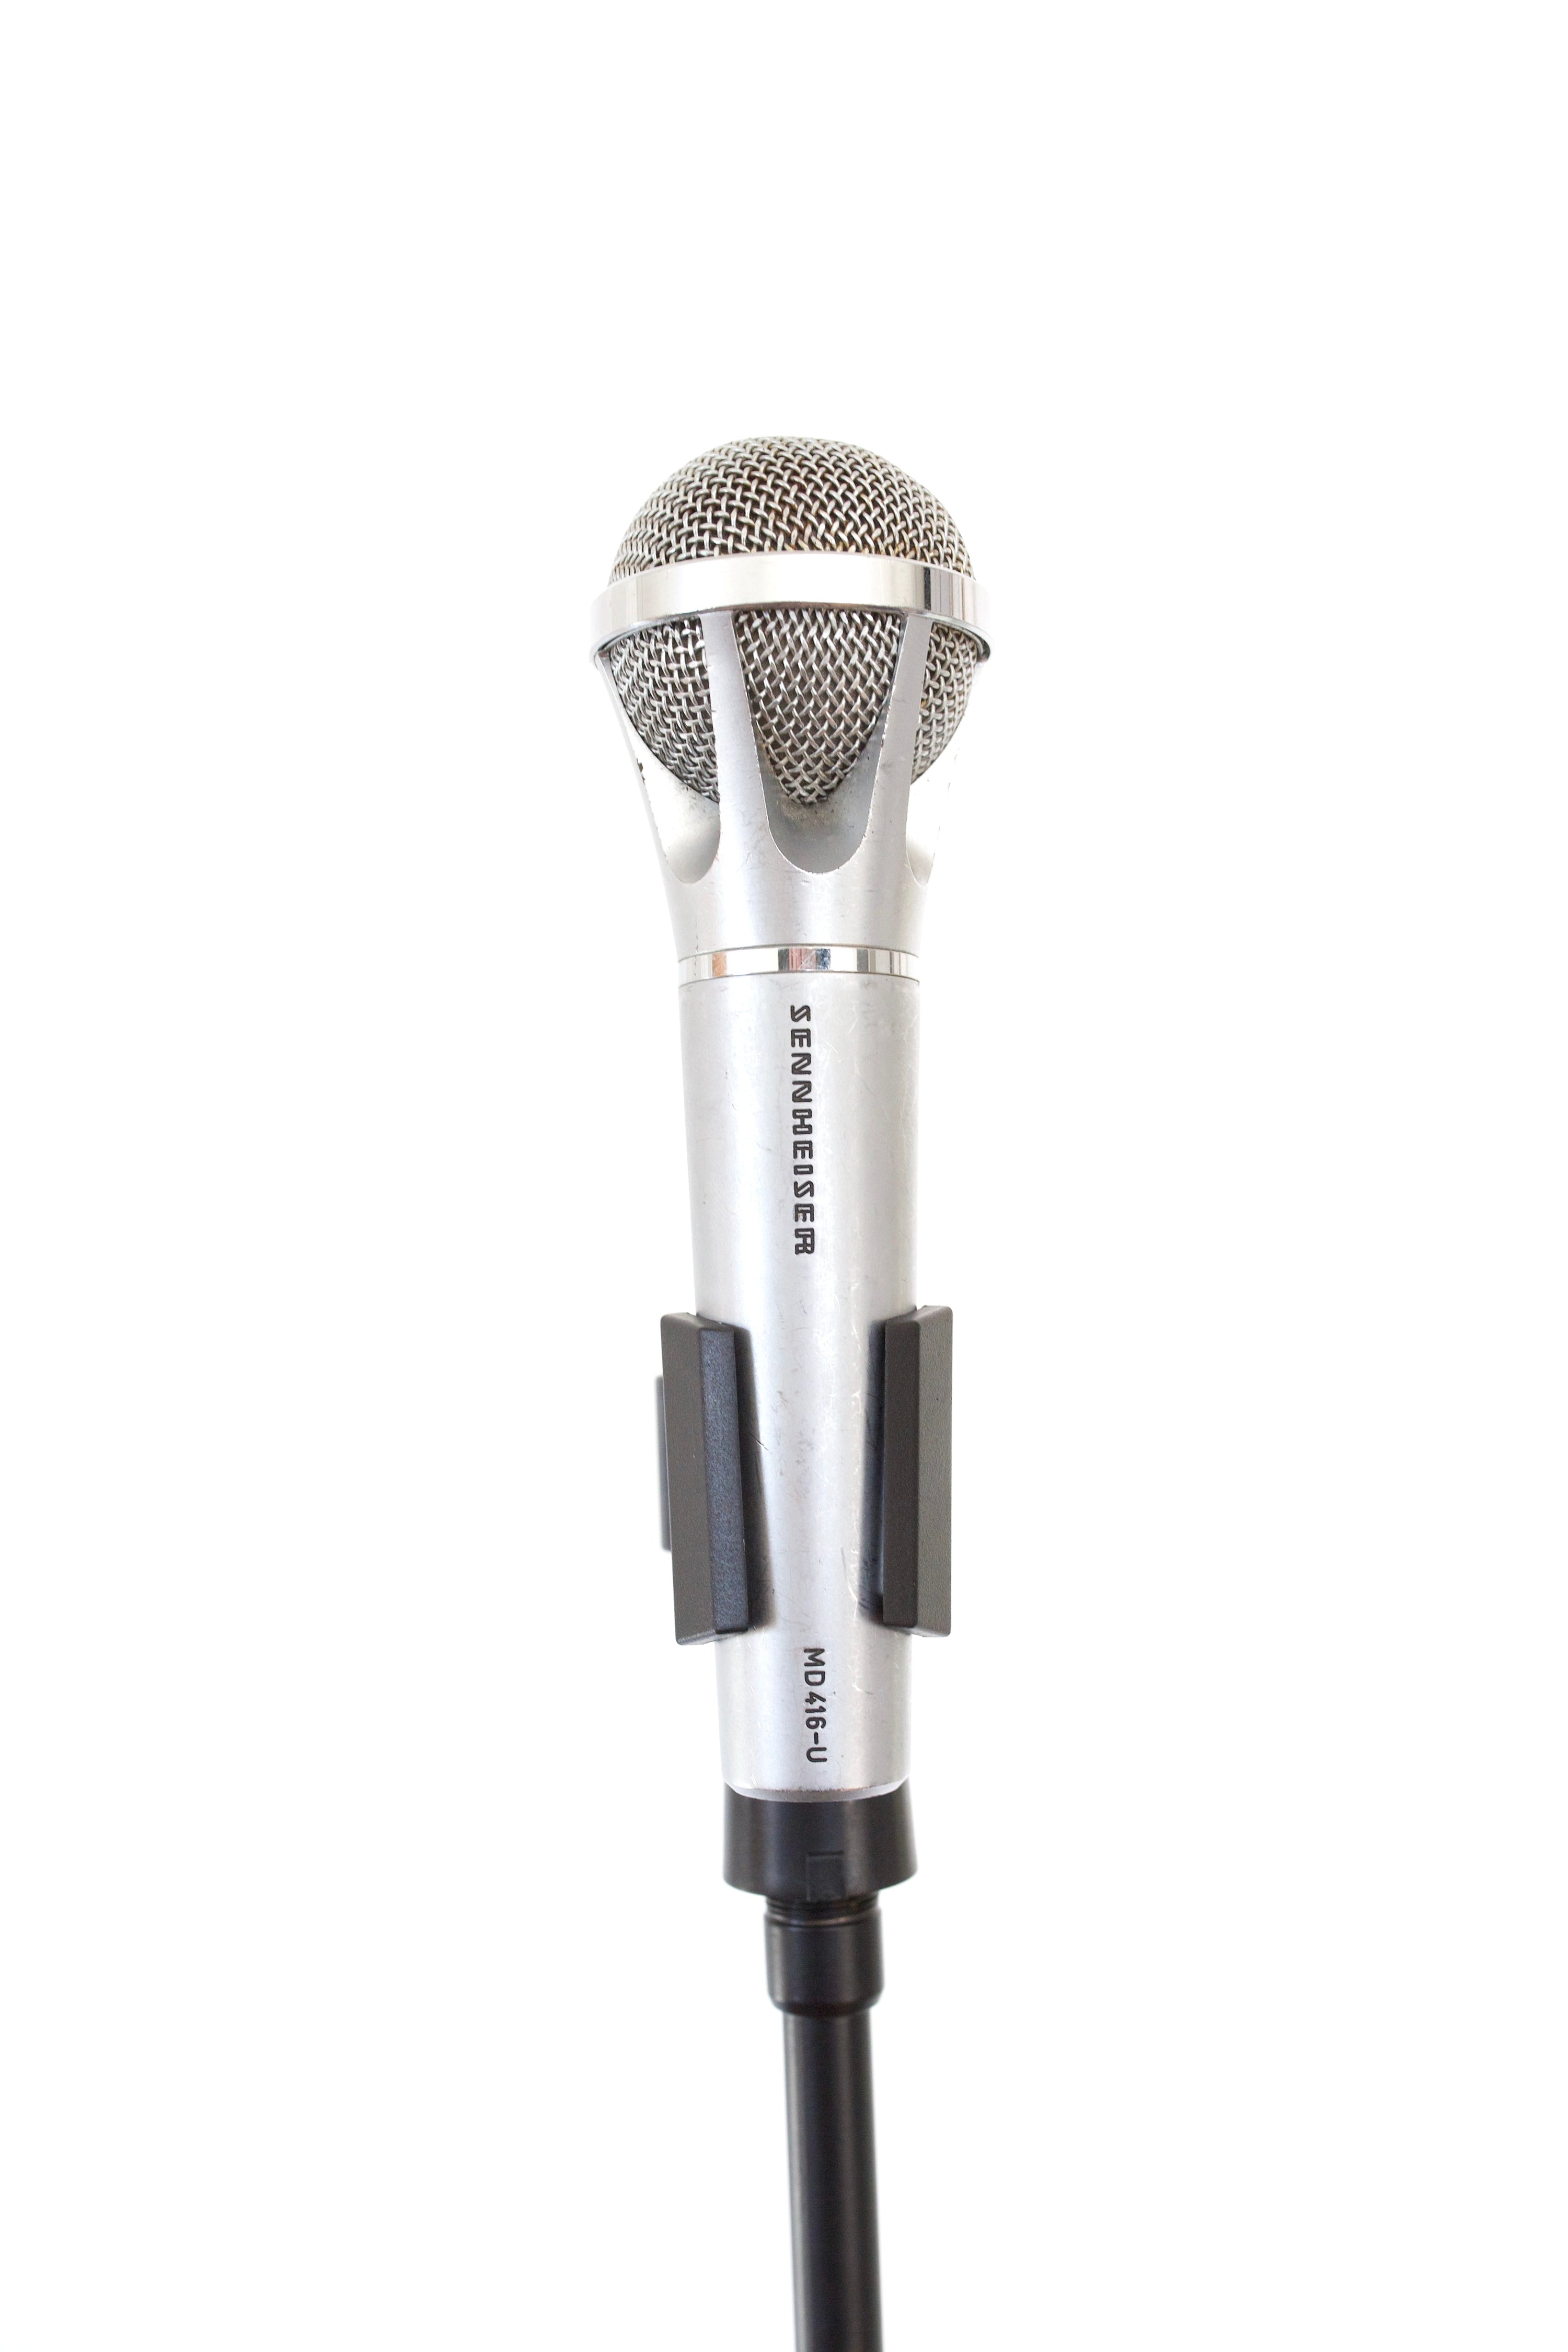 Sennheiser MD416-U Dynamic Microphone